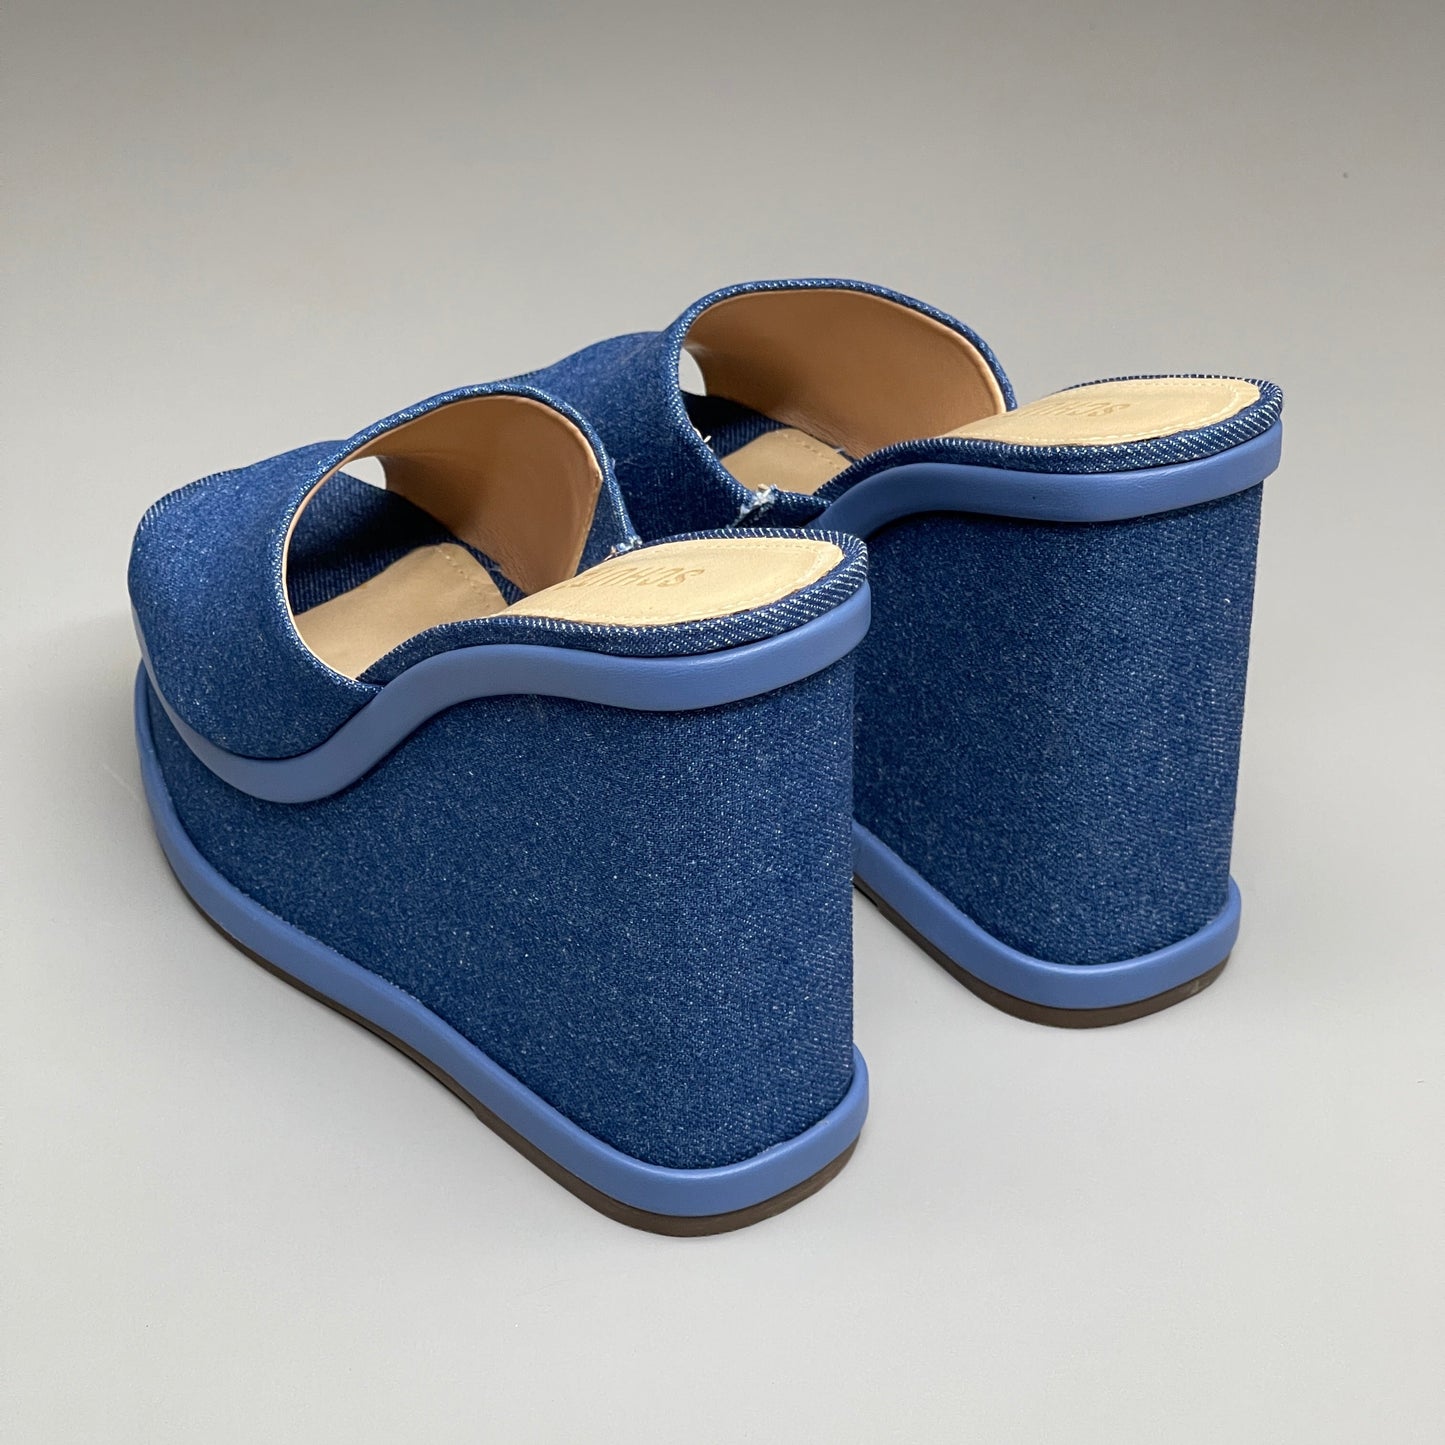 SCHUTZ Dalle Denim Women's Wedge Sandal Blue Platform Shoe Sz 5B (New)